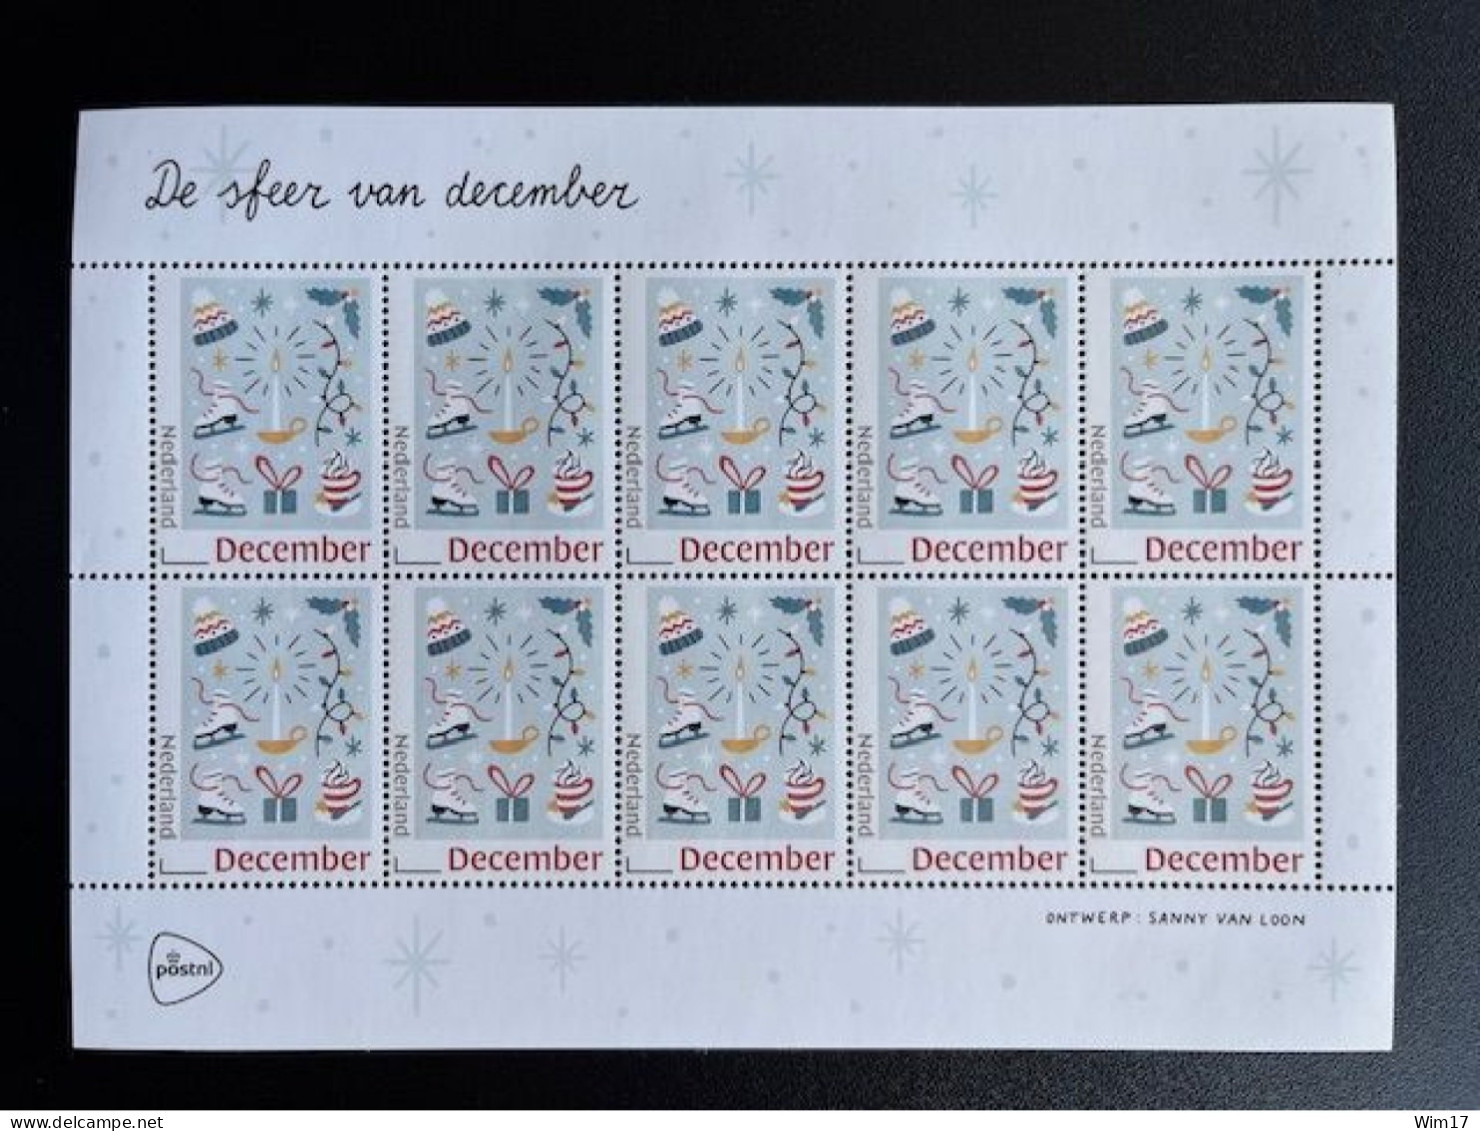 NETHERLANDS 2018 CHRISTMAS STAMPS SHEET OF 10 MNH 05-11-2018 NEDERLAND DECEMBERZEGELS NVPH 3697 - Cartas